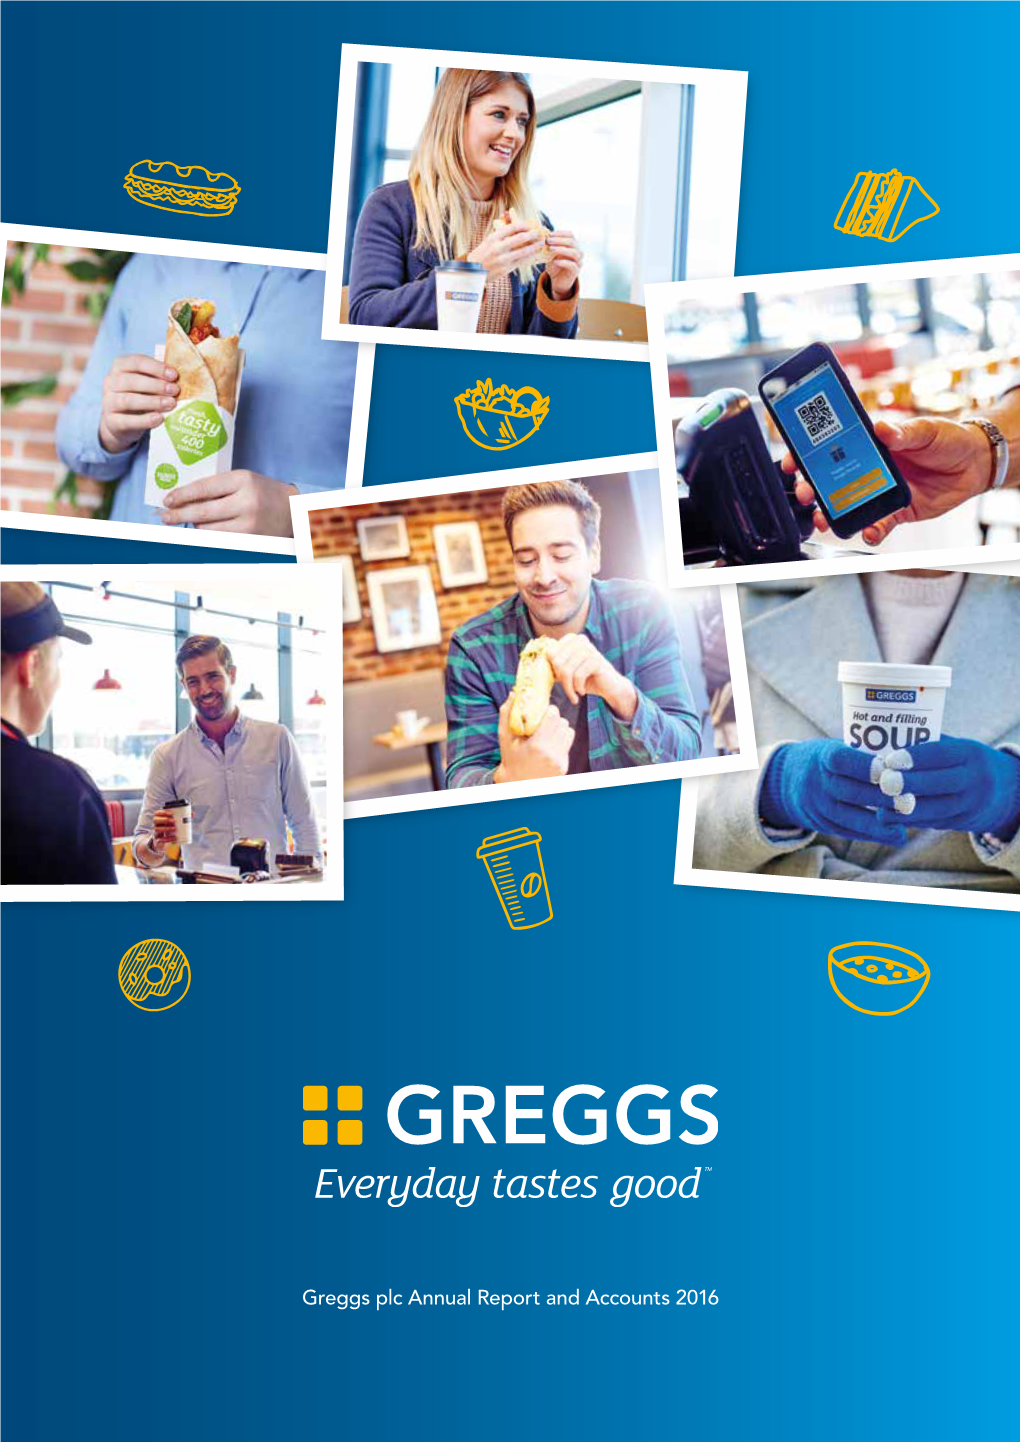 Greggs Plc Annual Report and Accounts 2016